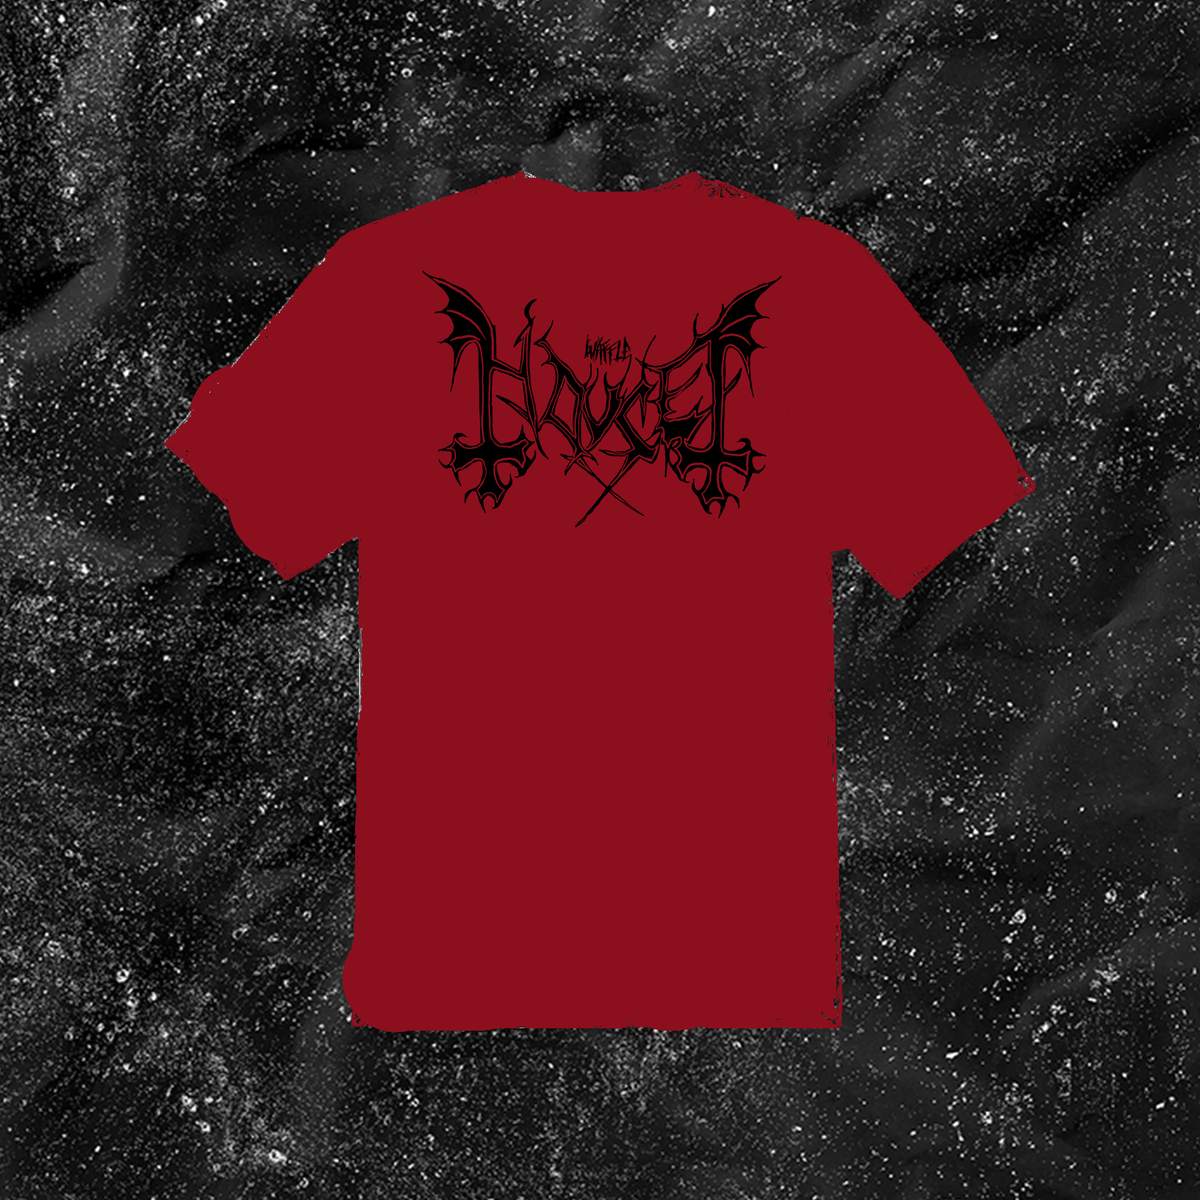 Mayhem - Band Logo (Red Edition) - Mayhem - T-Shirt sold by